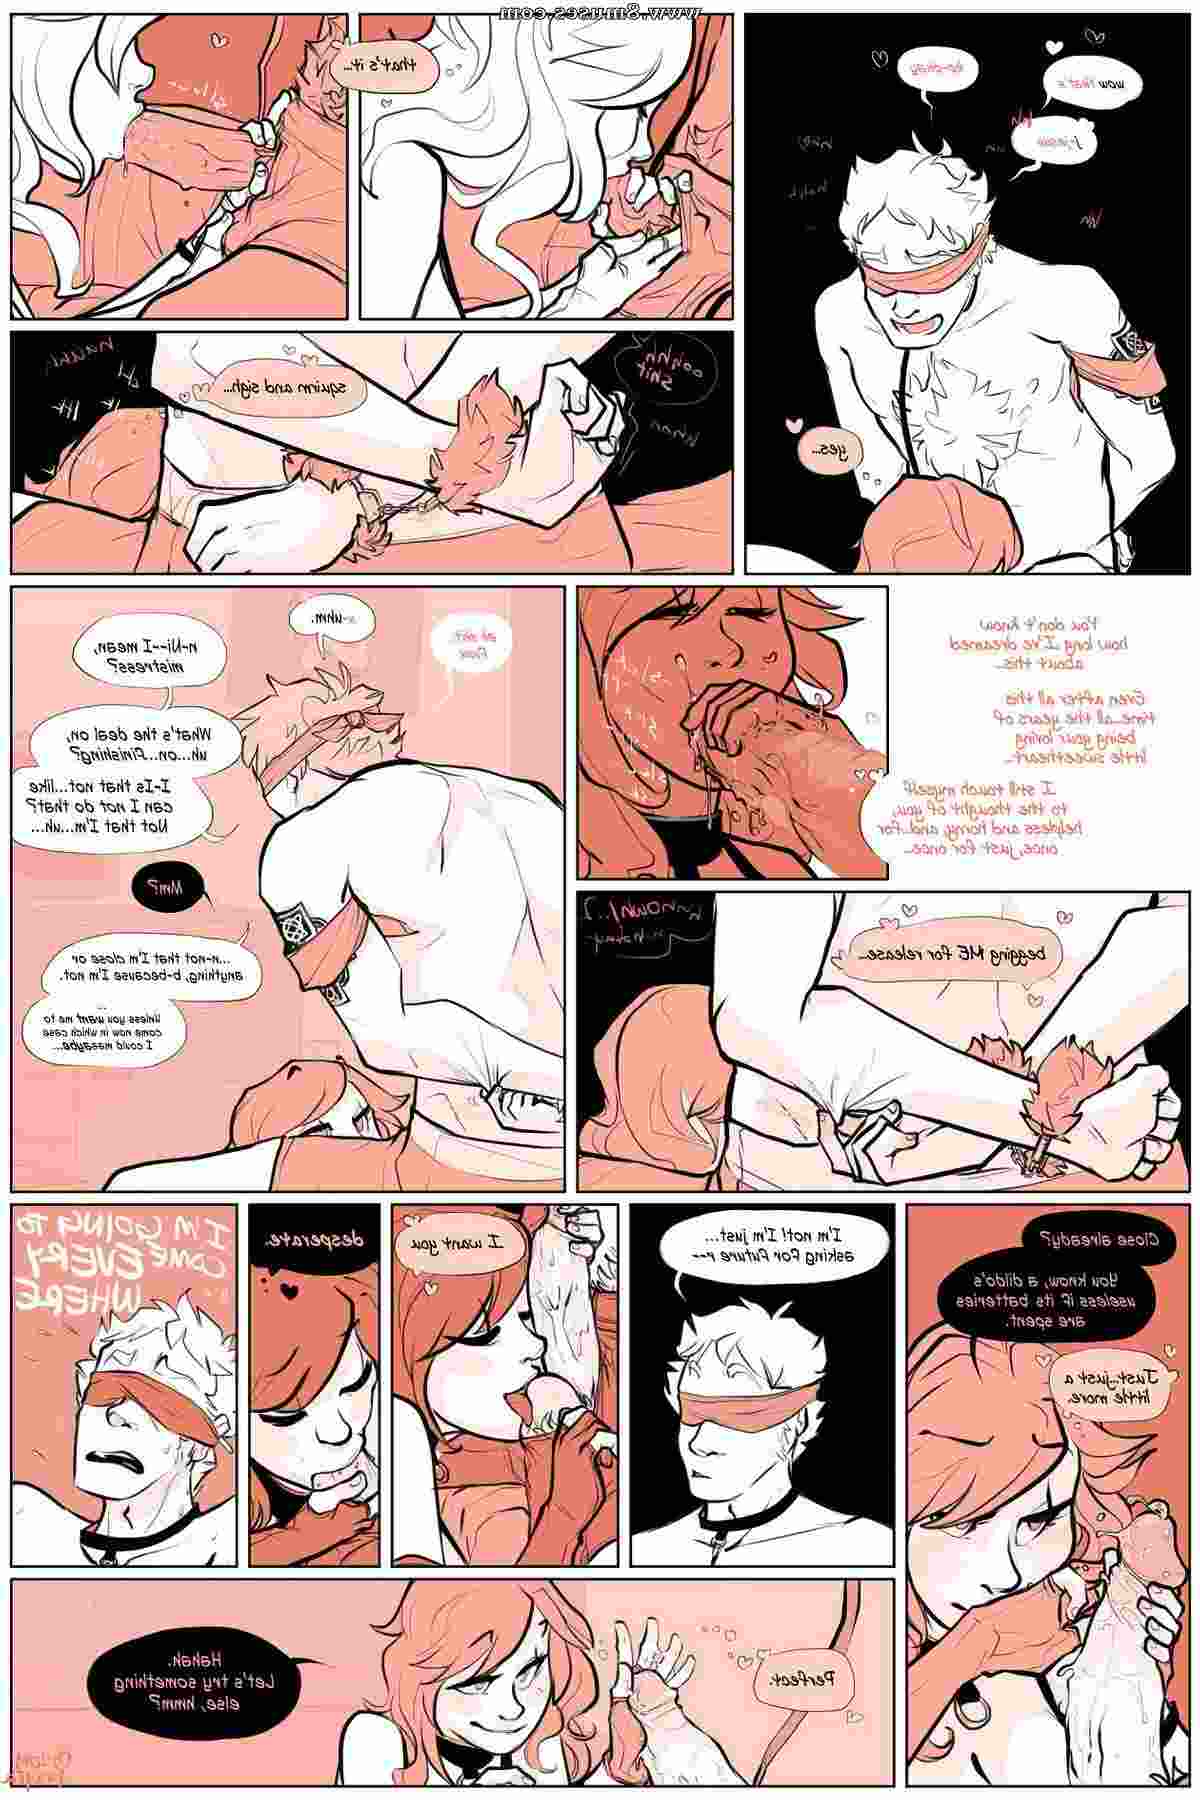 Slipshine-Comics/Neapolitan Neapolitan__8muses_-_Sex_and_Porn_Comics_82.jpg